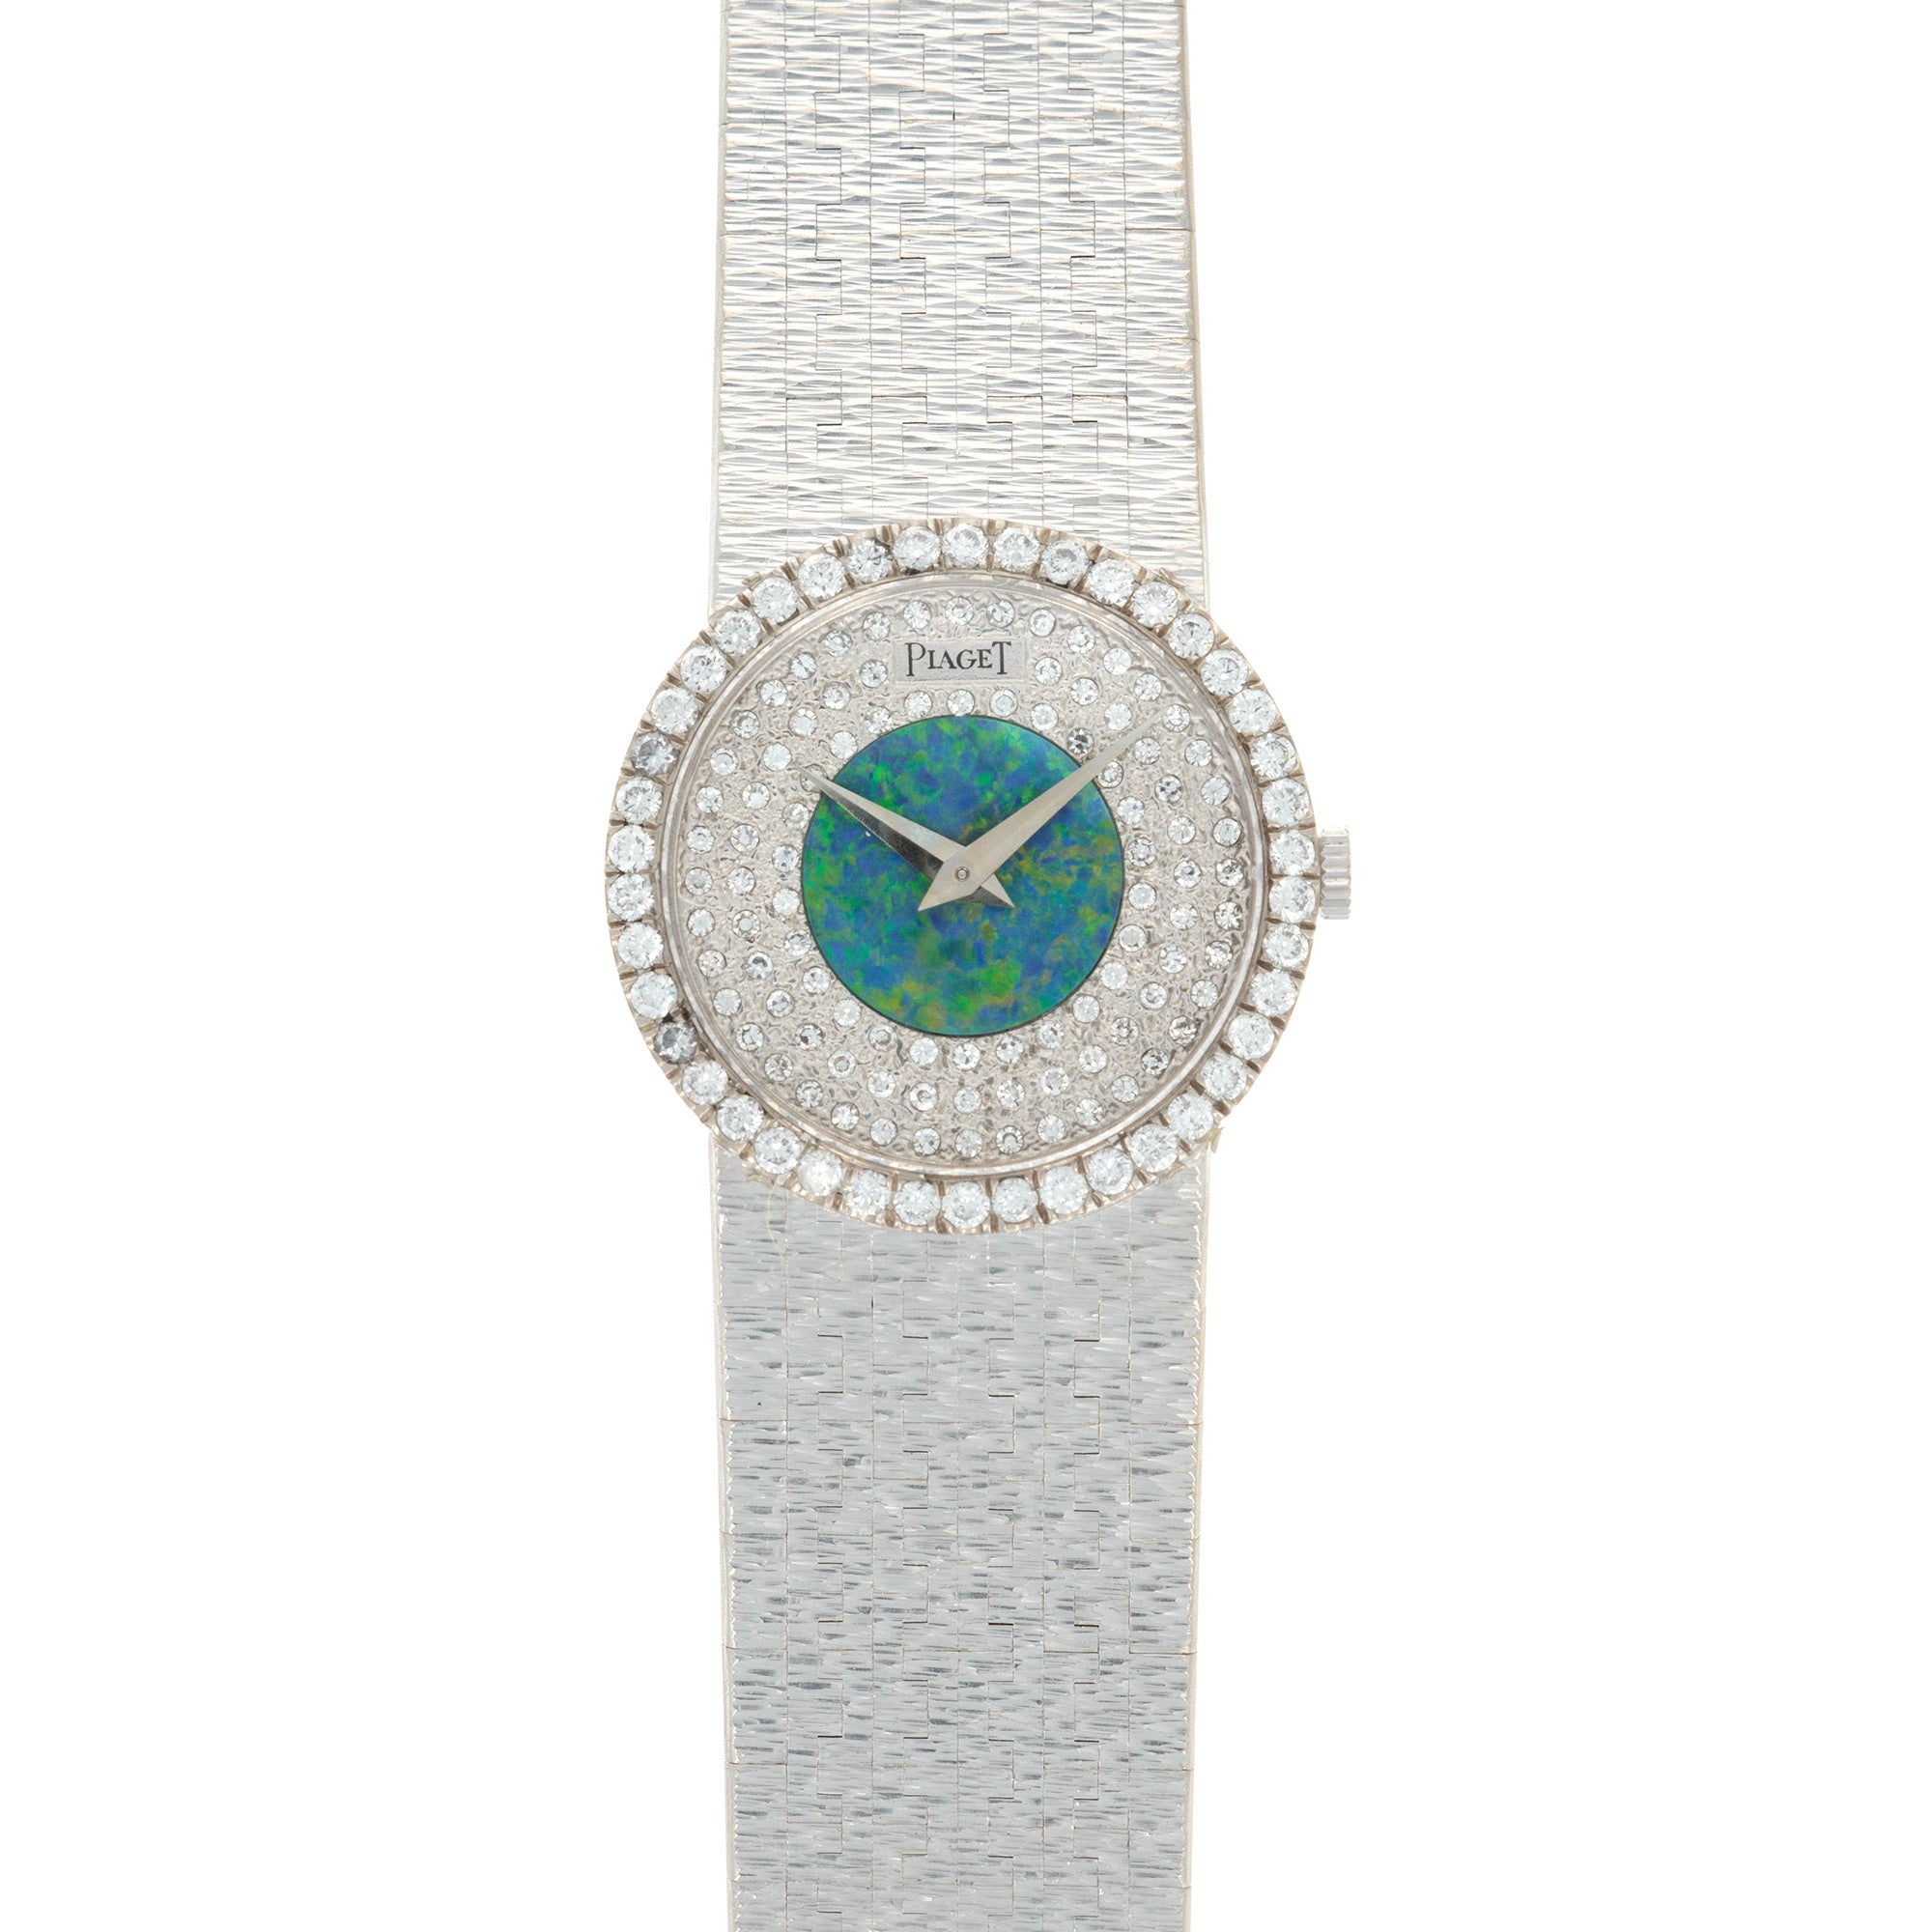 Piaget - Piaget White Gold Diamond & Opal Watch - The Keystone Watches